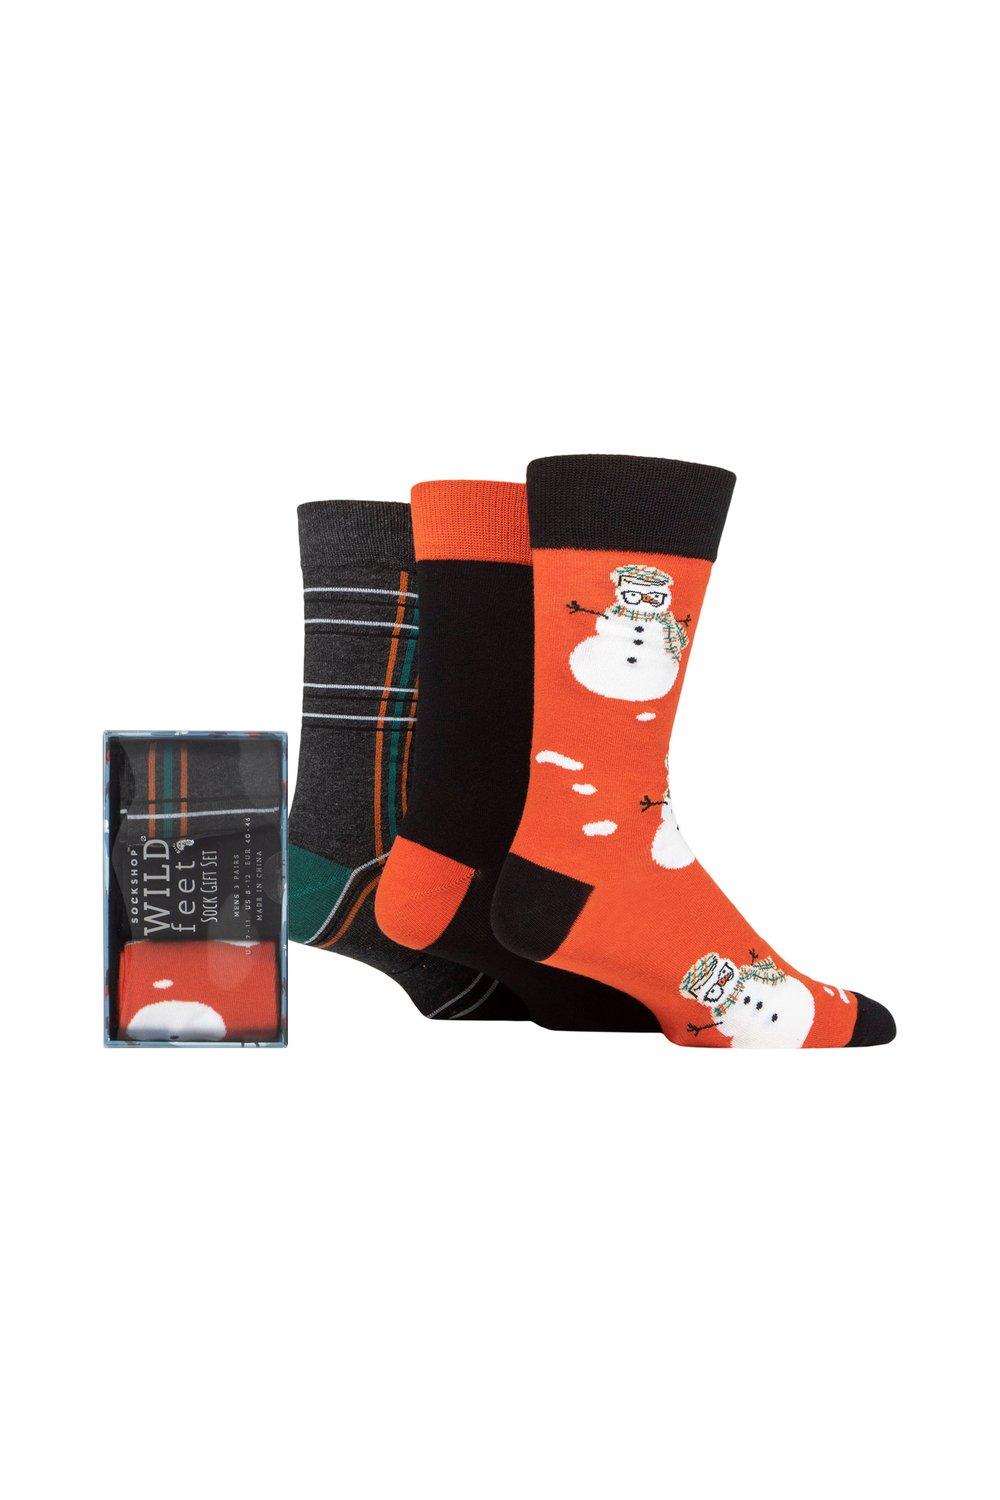 new women striped socks winter warm fluffy socks coral velvet feet warmer christmas gift шкарпэтку 3 пары рождественских подарочных носков Winter Wonderland в упаковке SOCKSHOP Wild Feet, белый